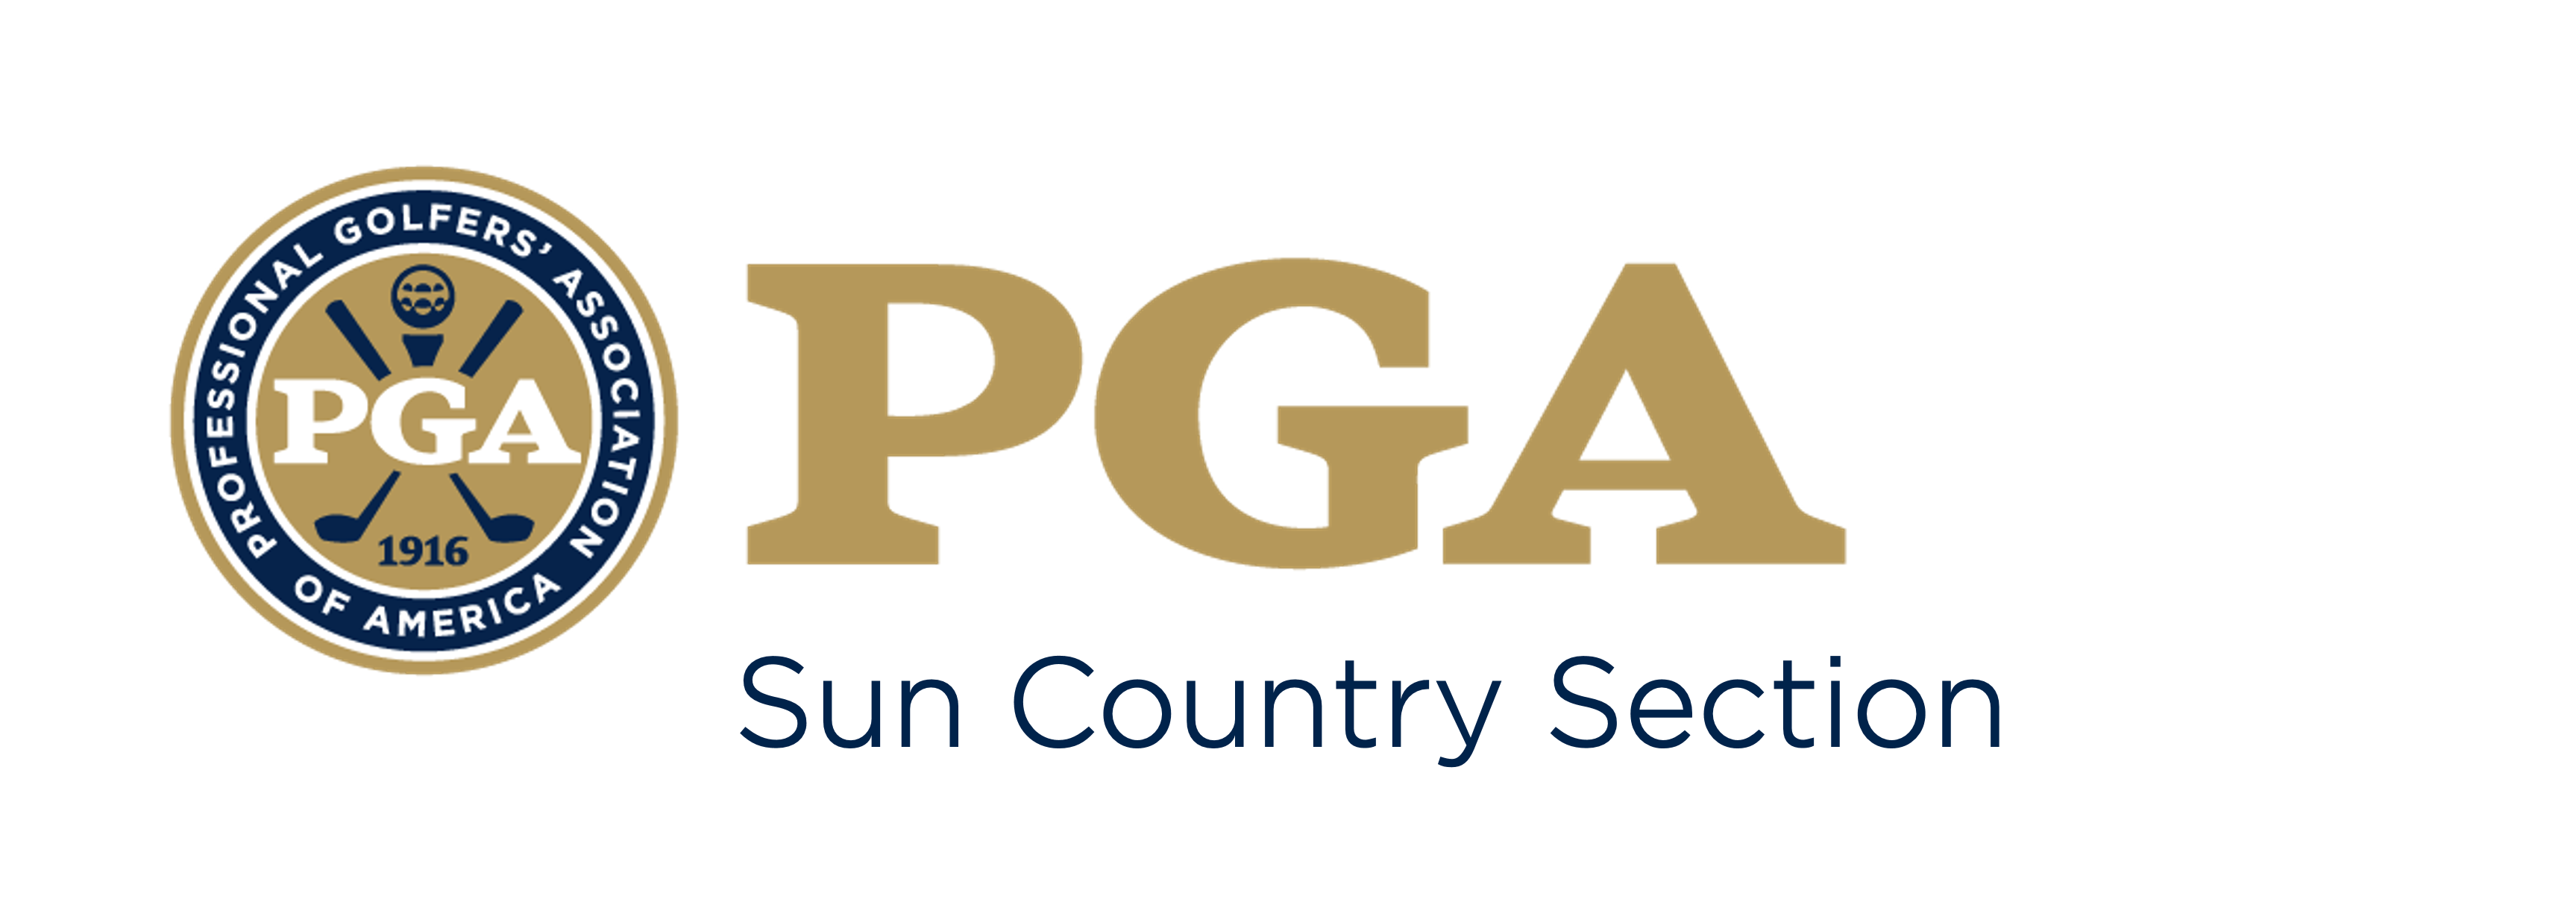 Sun Country PGA Hole In One Program